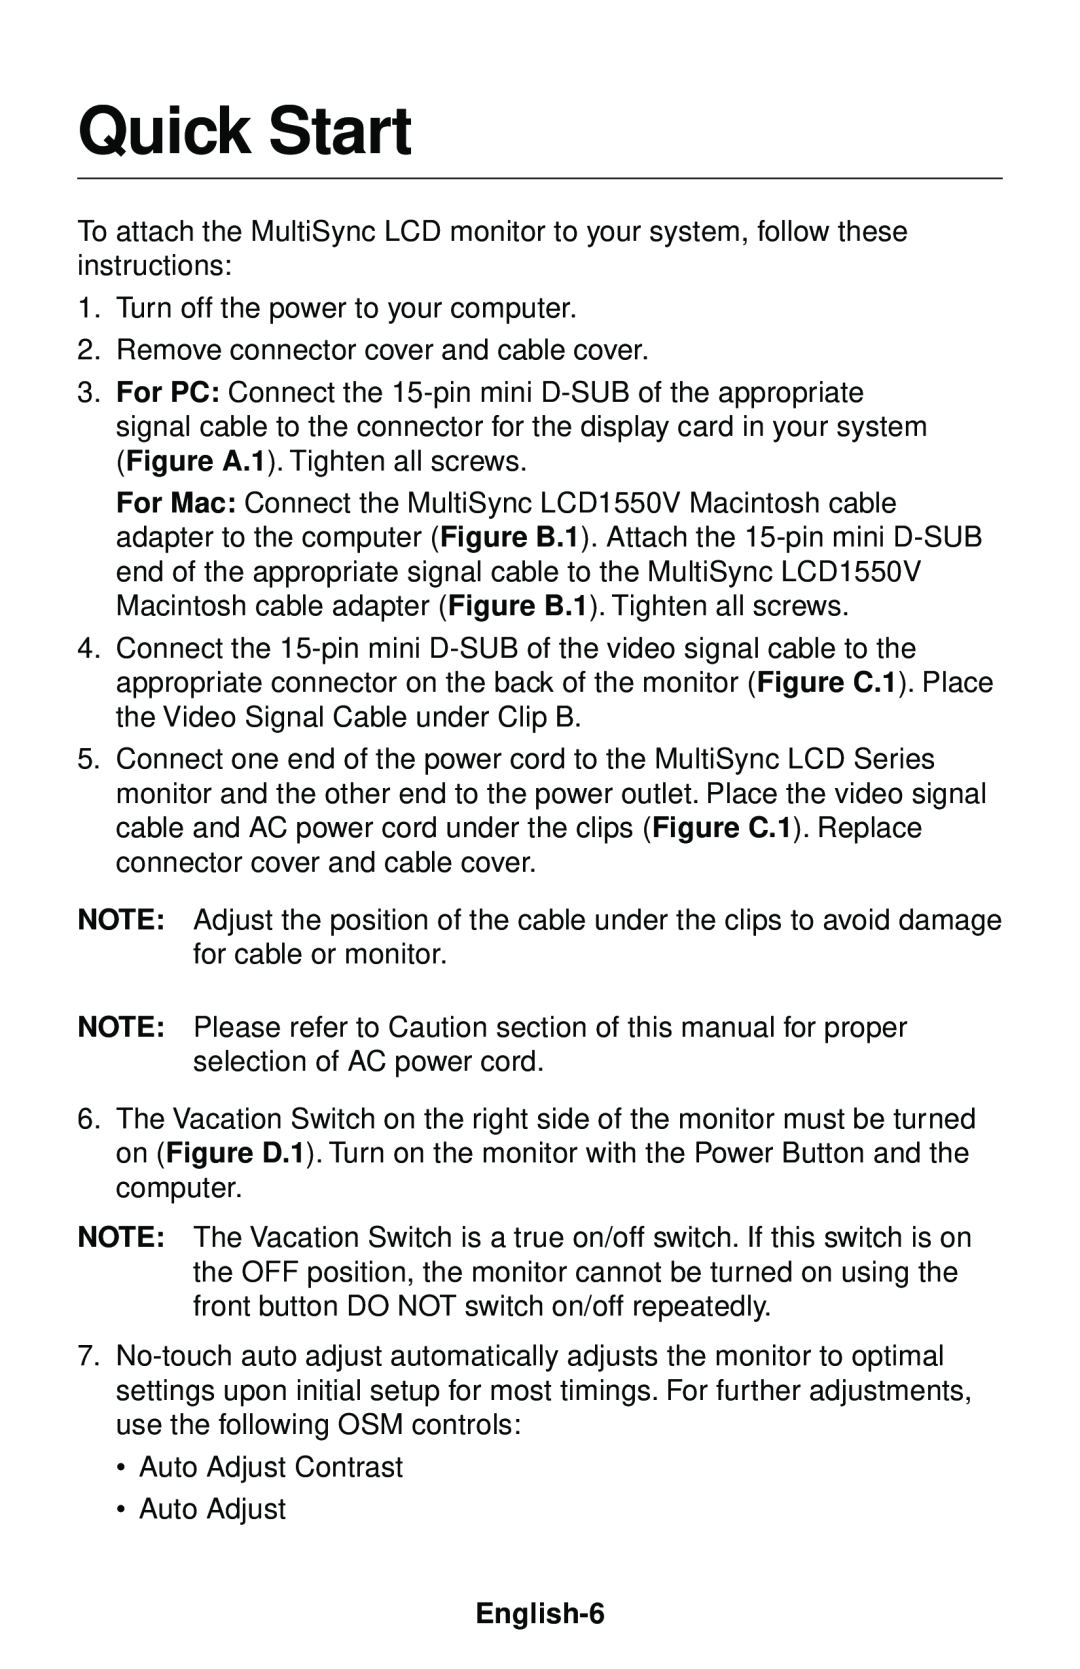 NEC LCD1550V user manual Quick Start, English-6 